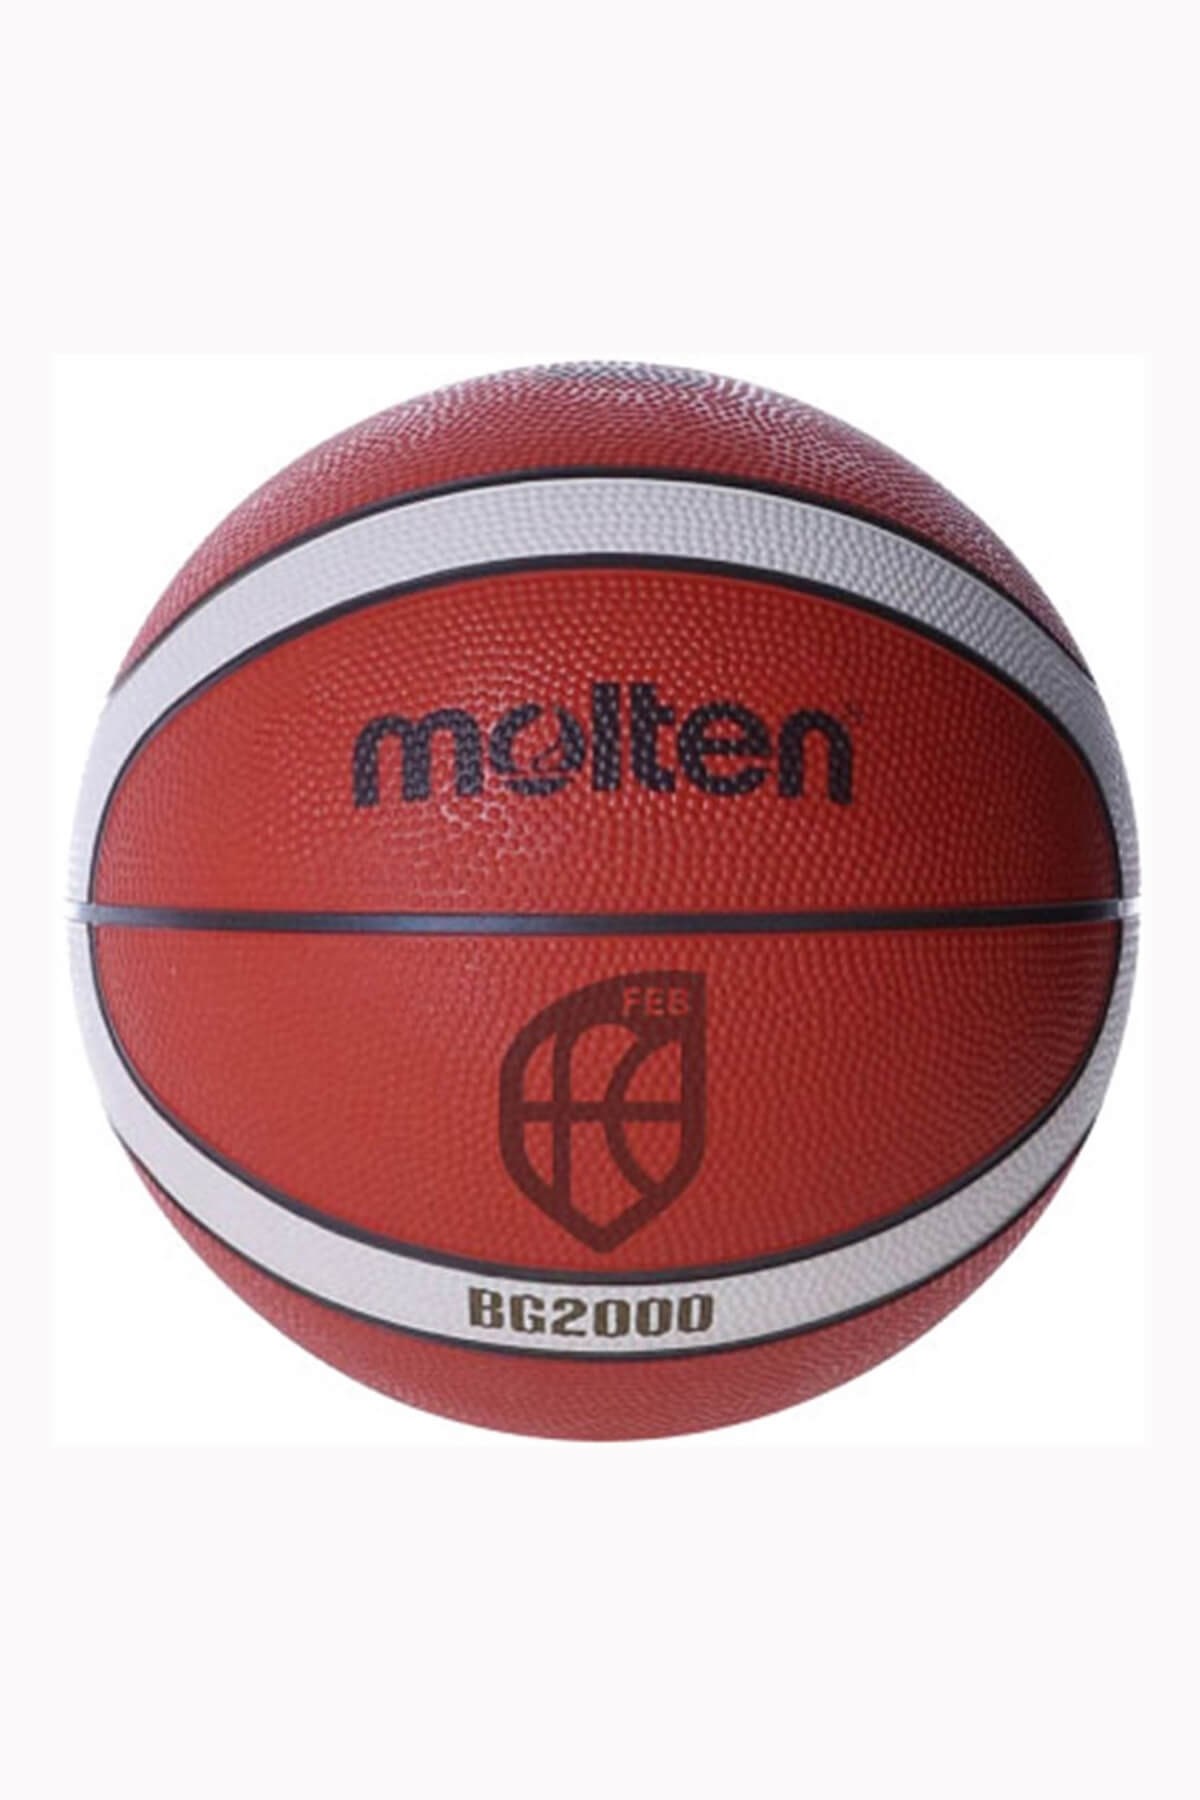 Molten-B3G2000 Kauçuk Basketbol Topu(3) Numara